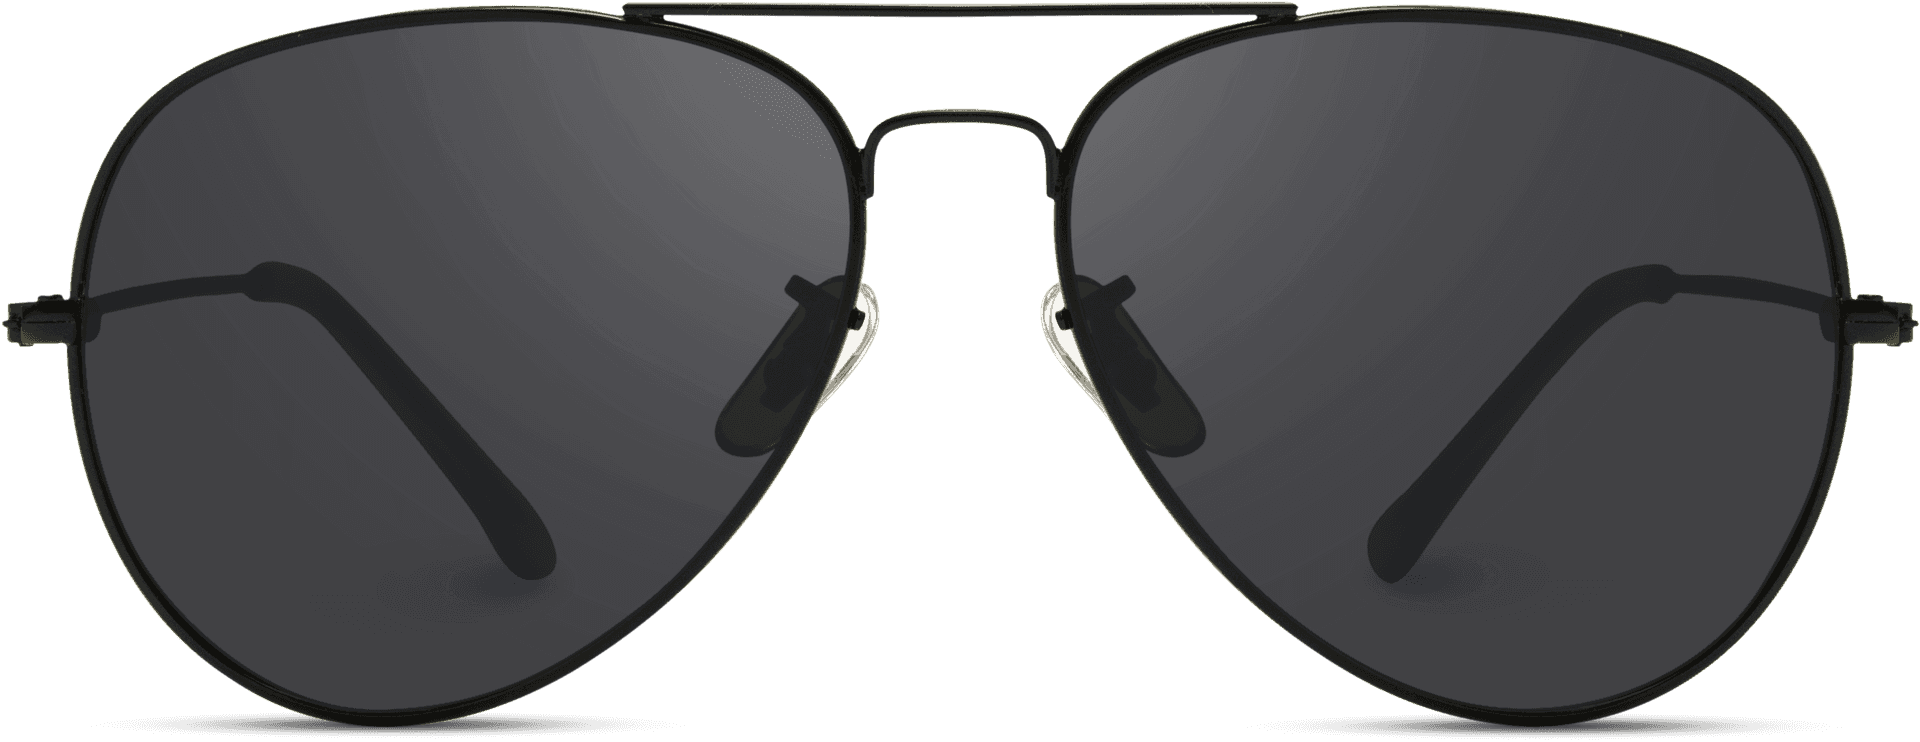 Black Aviator Sunglasses PNG